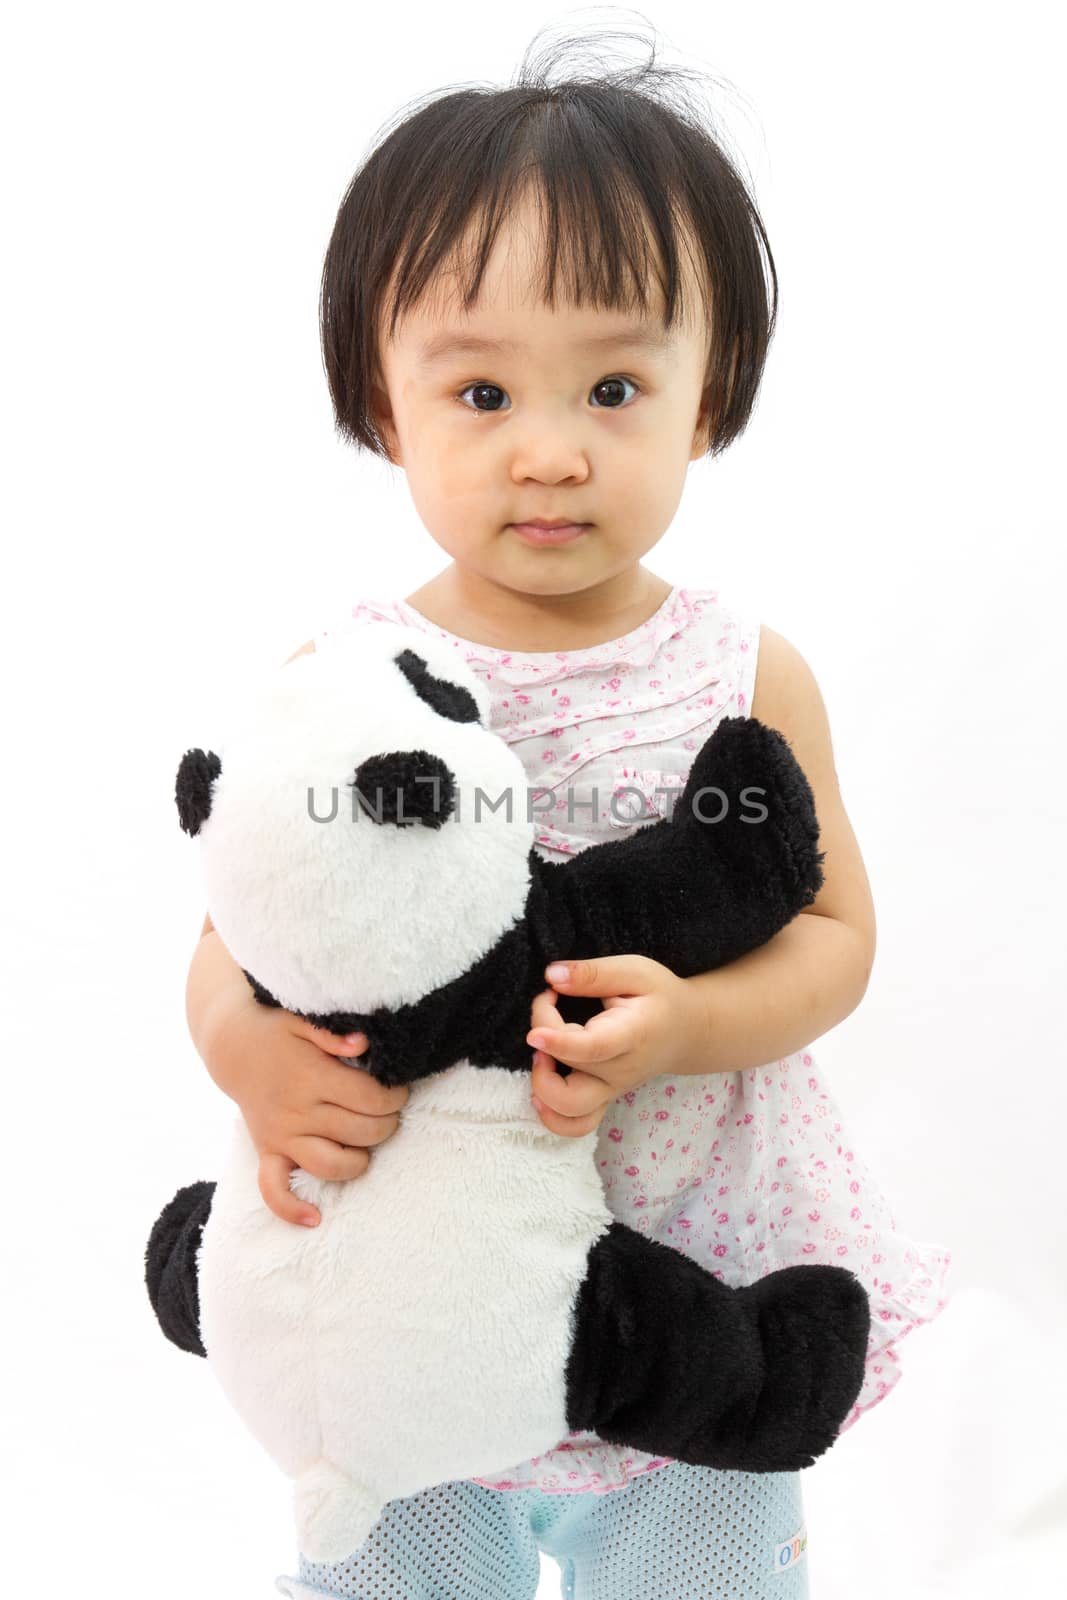 Chinese Little Girl Holding Panda Toy by kiankhoon